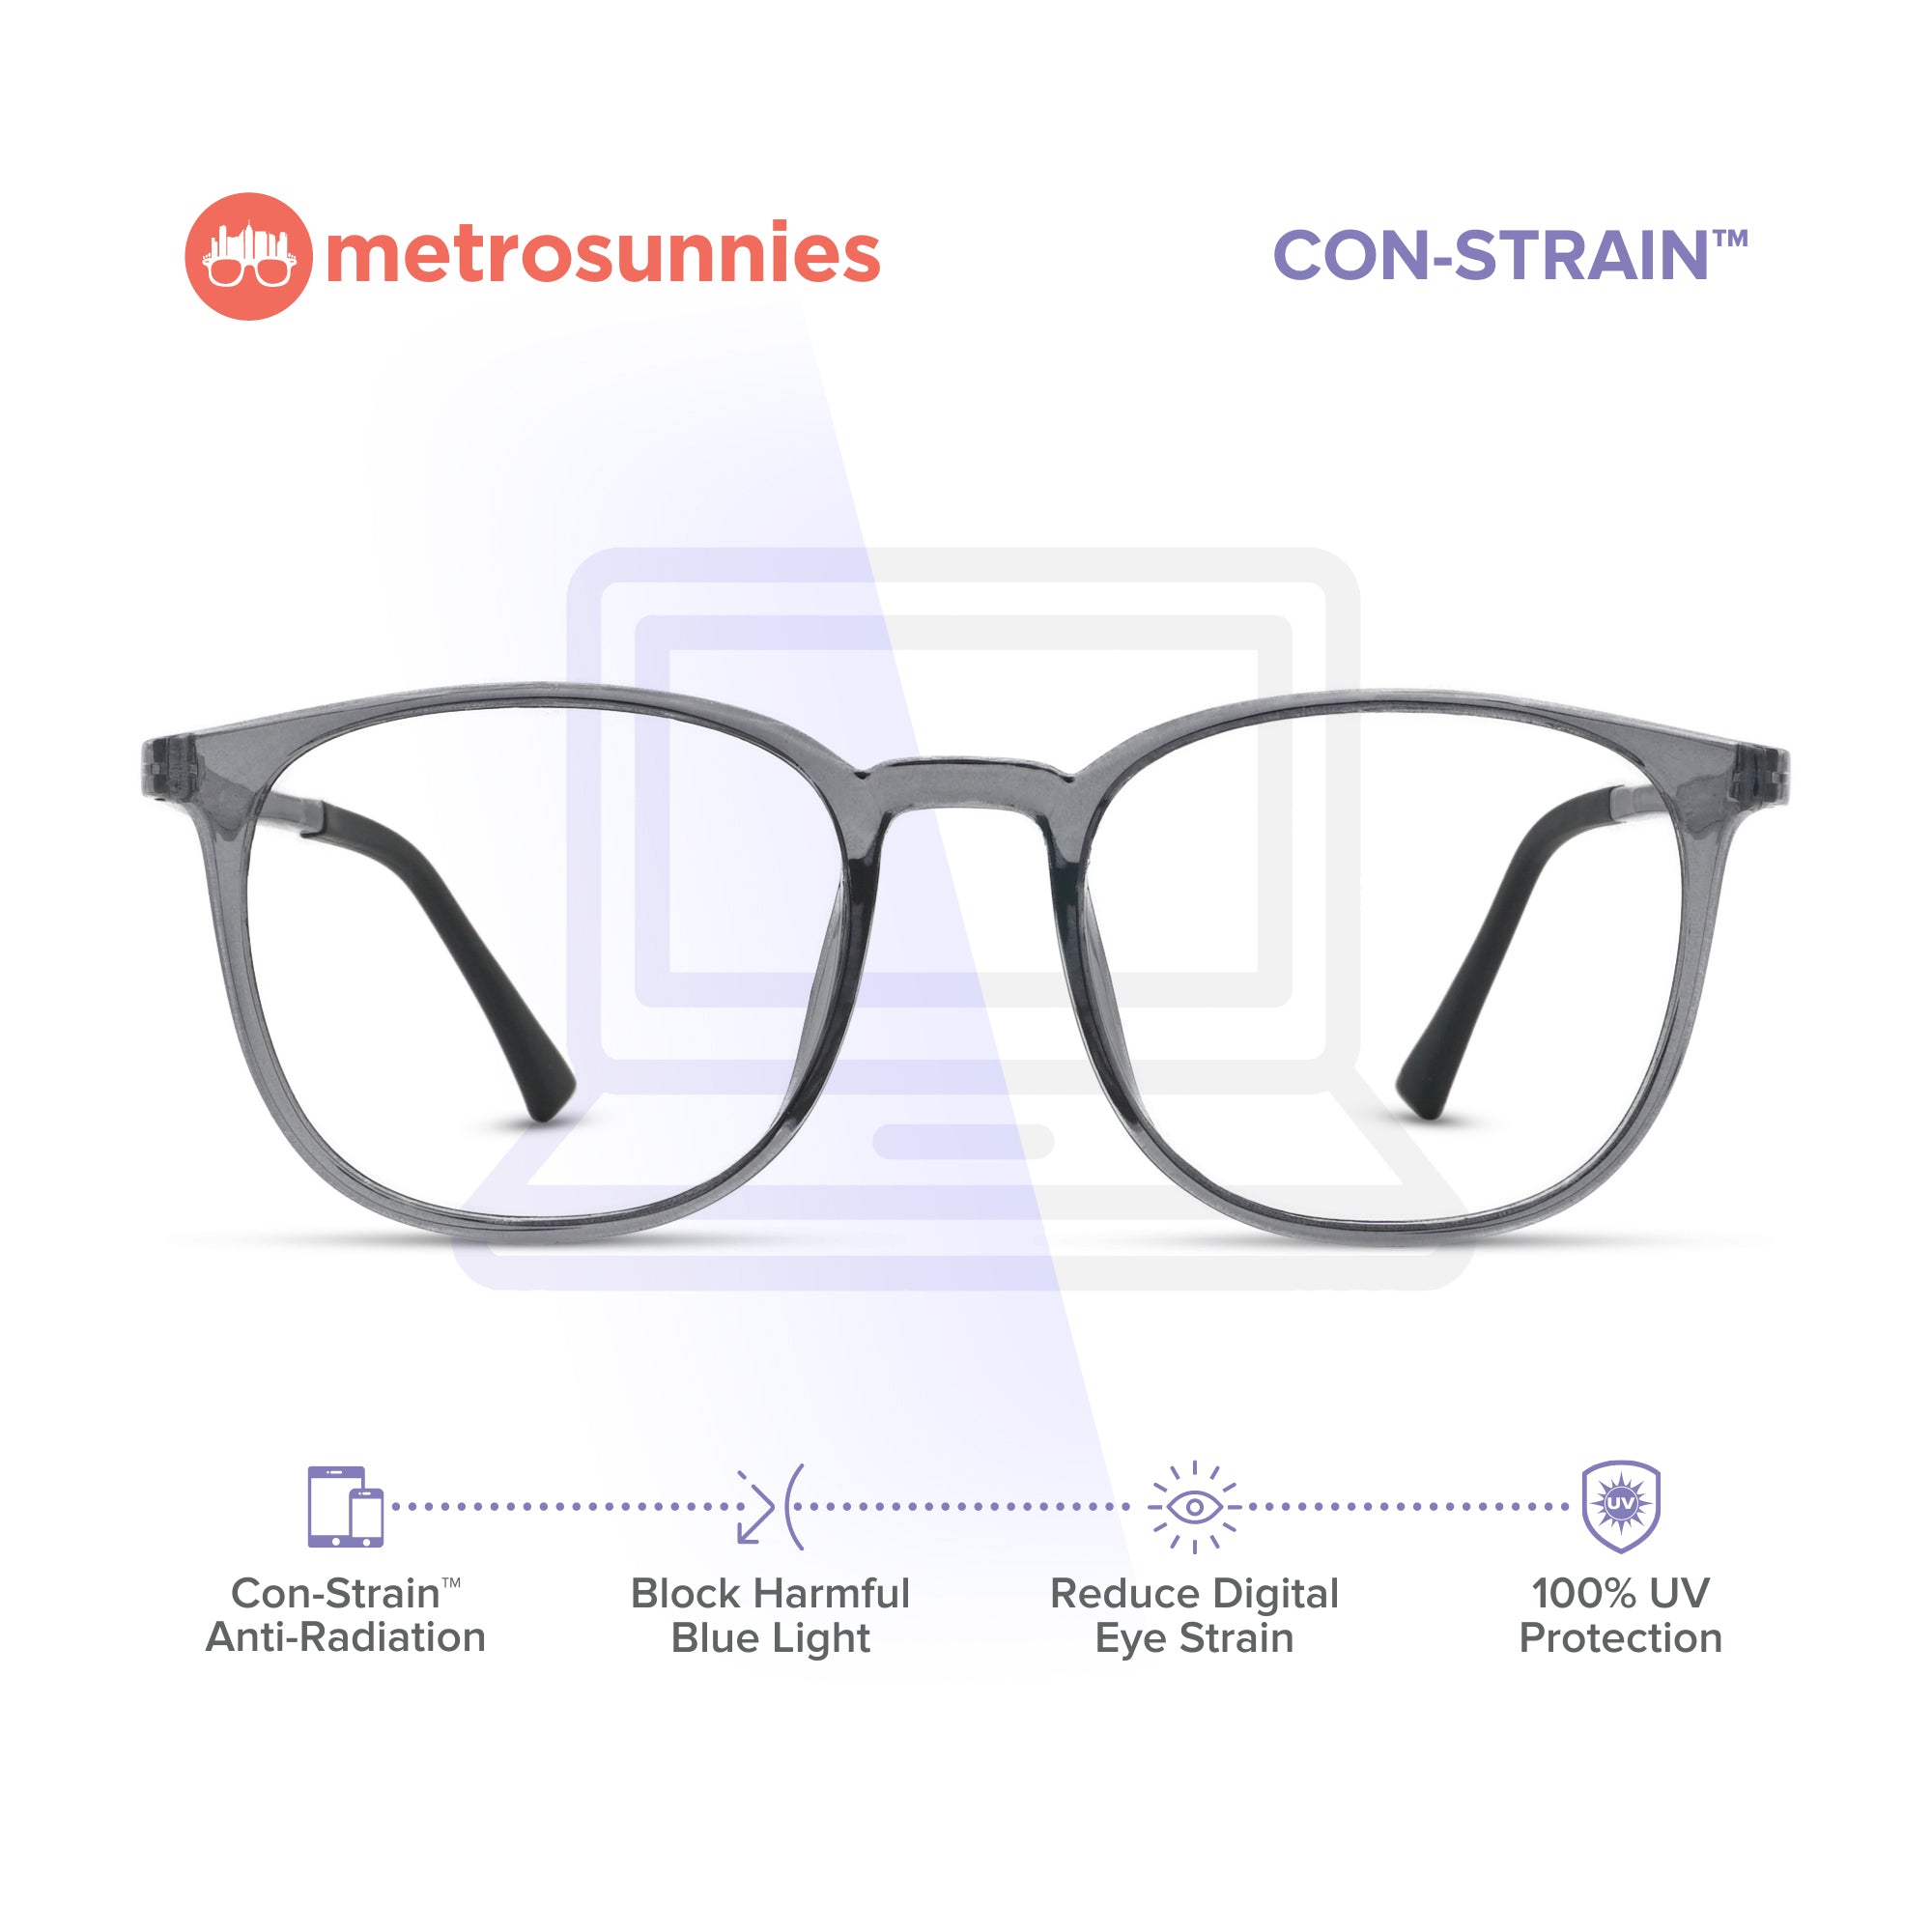 MetroSunnies Lion Specs (Gray) / Con-Strain Blue Light / Versairy / Anti-Radiation Eyeglasses